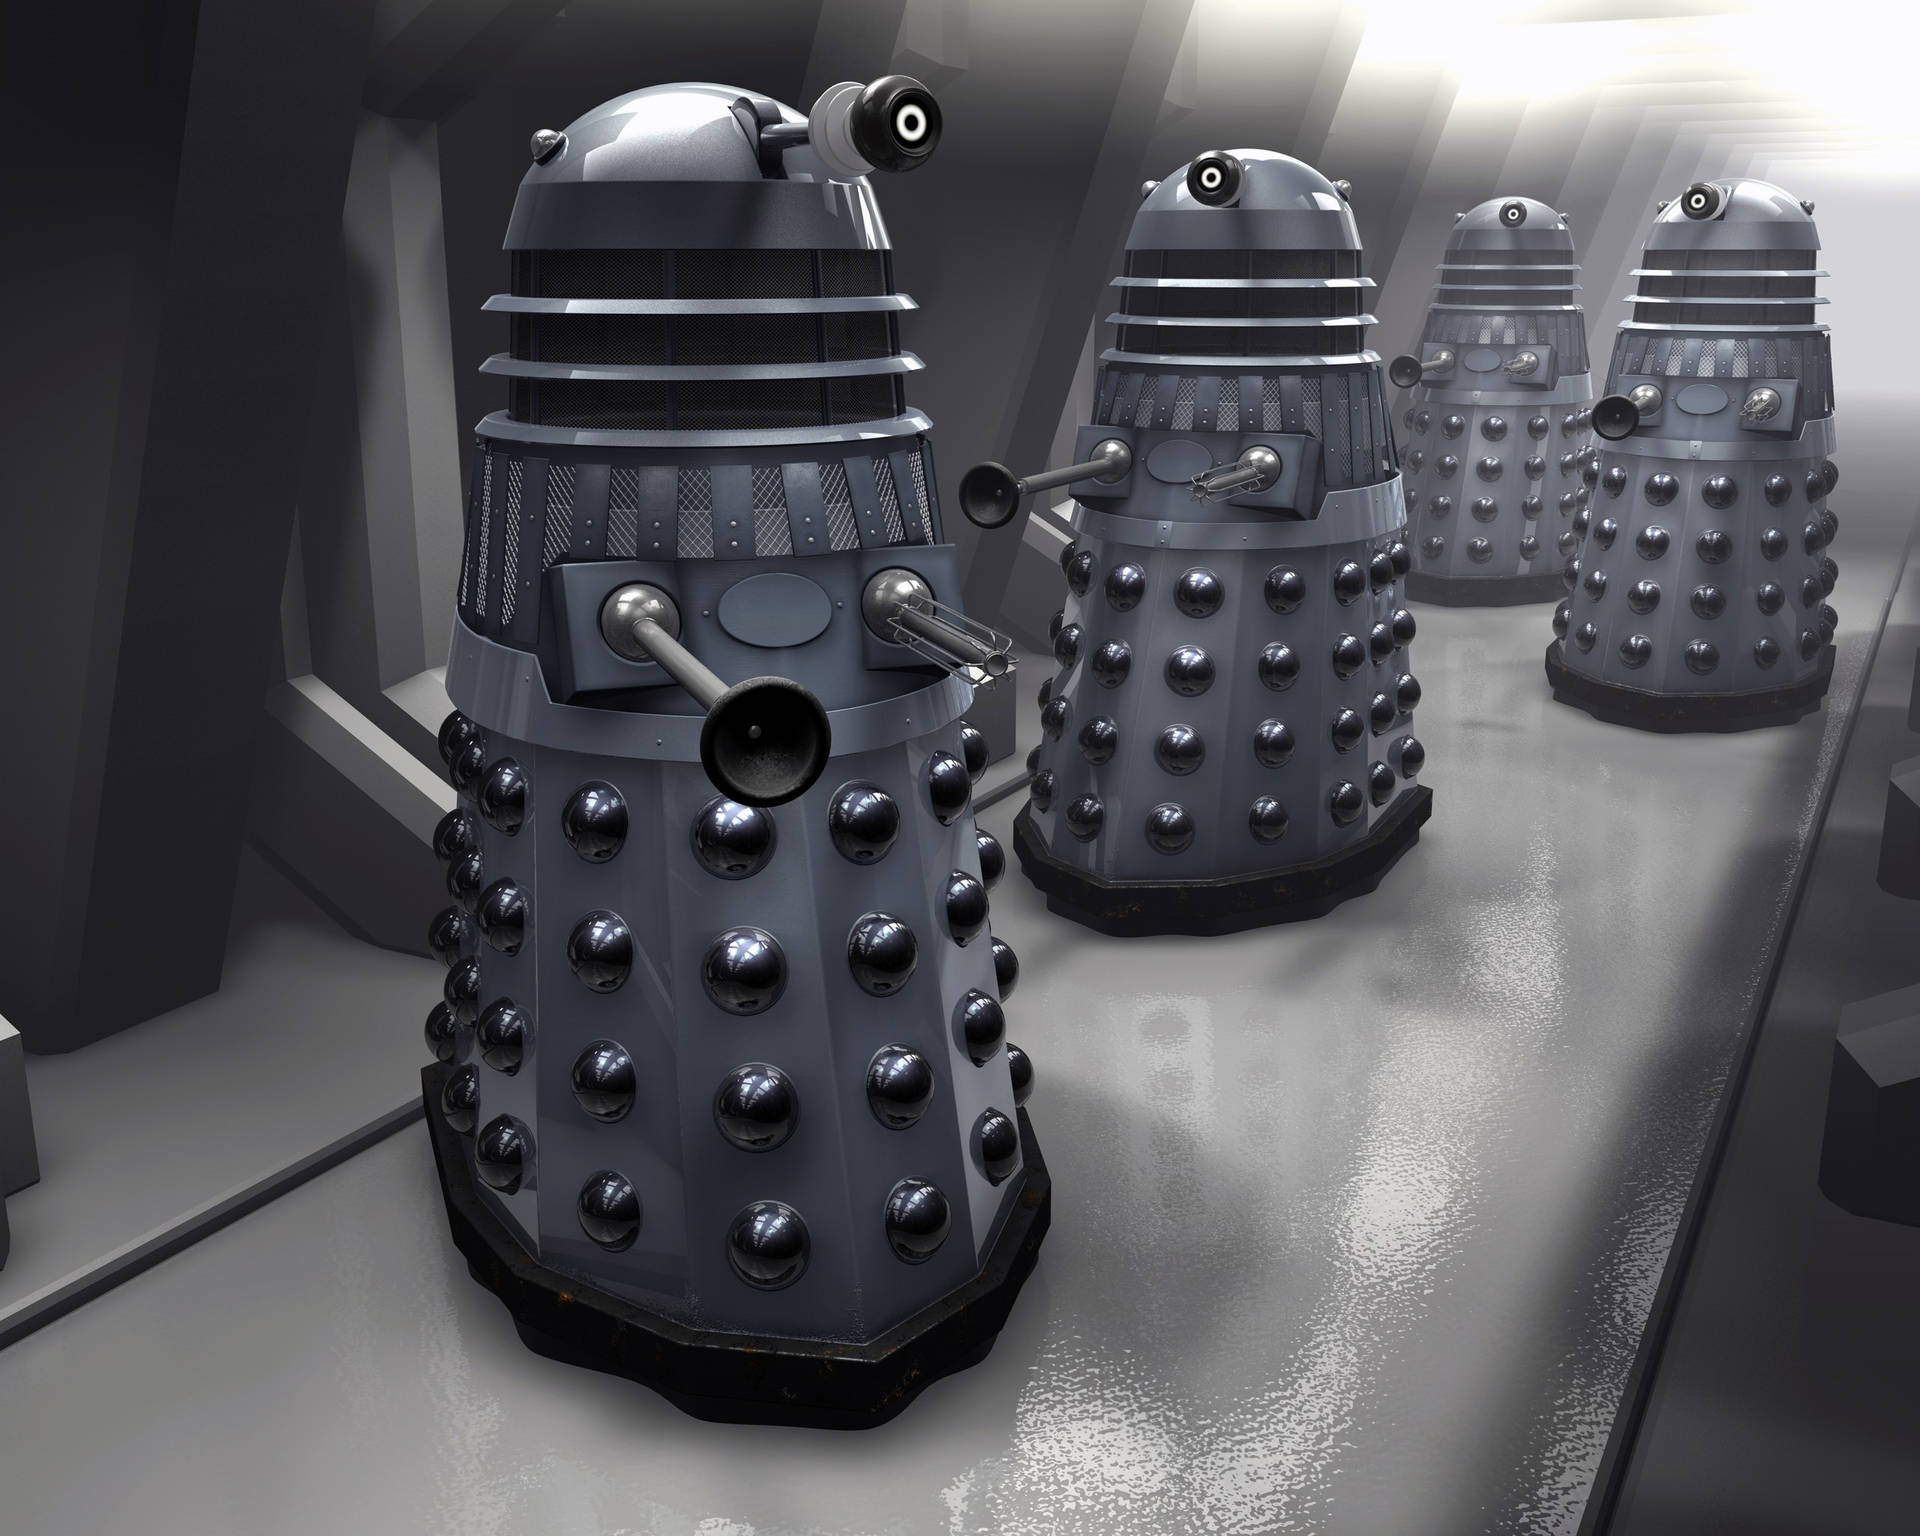 The Final Showdown - The Doctor vs The Daleks Wallpaper